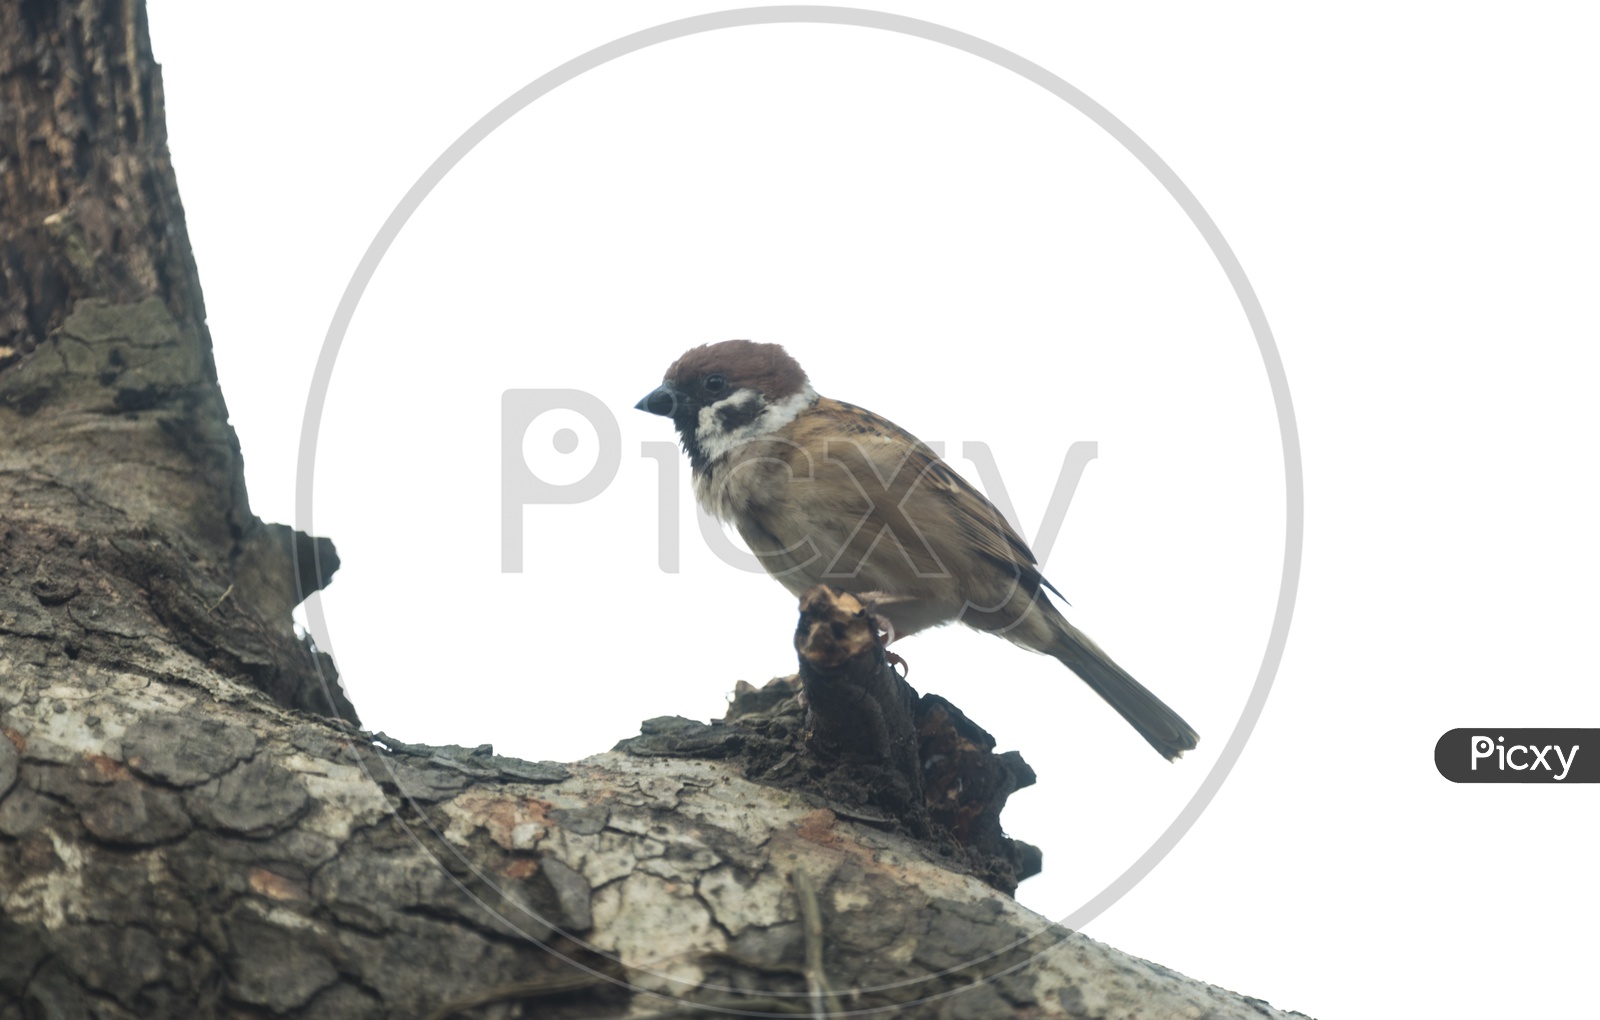 Eurasian Tree Sparrow Bird